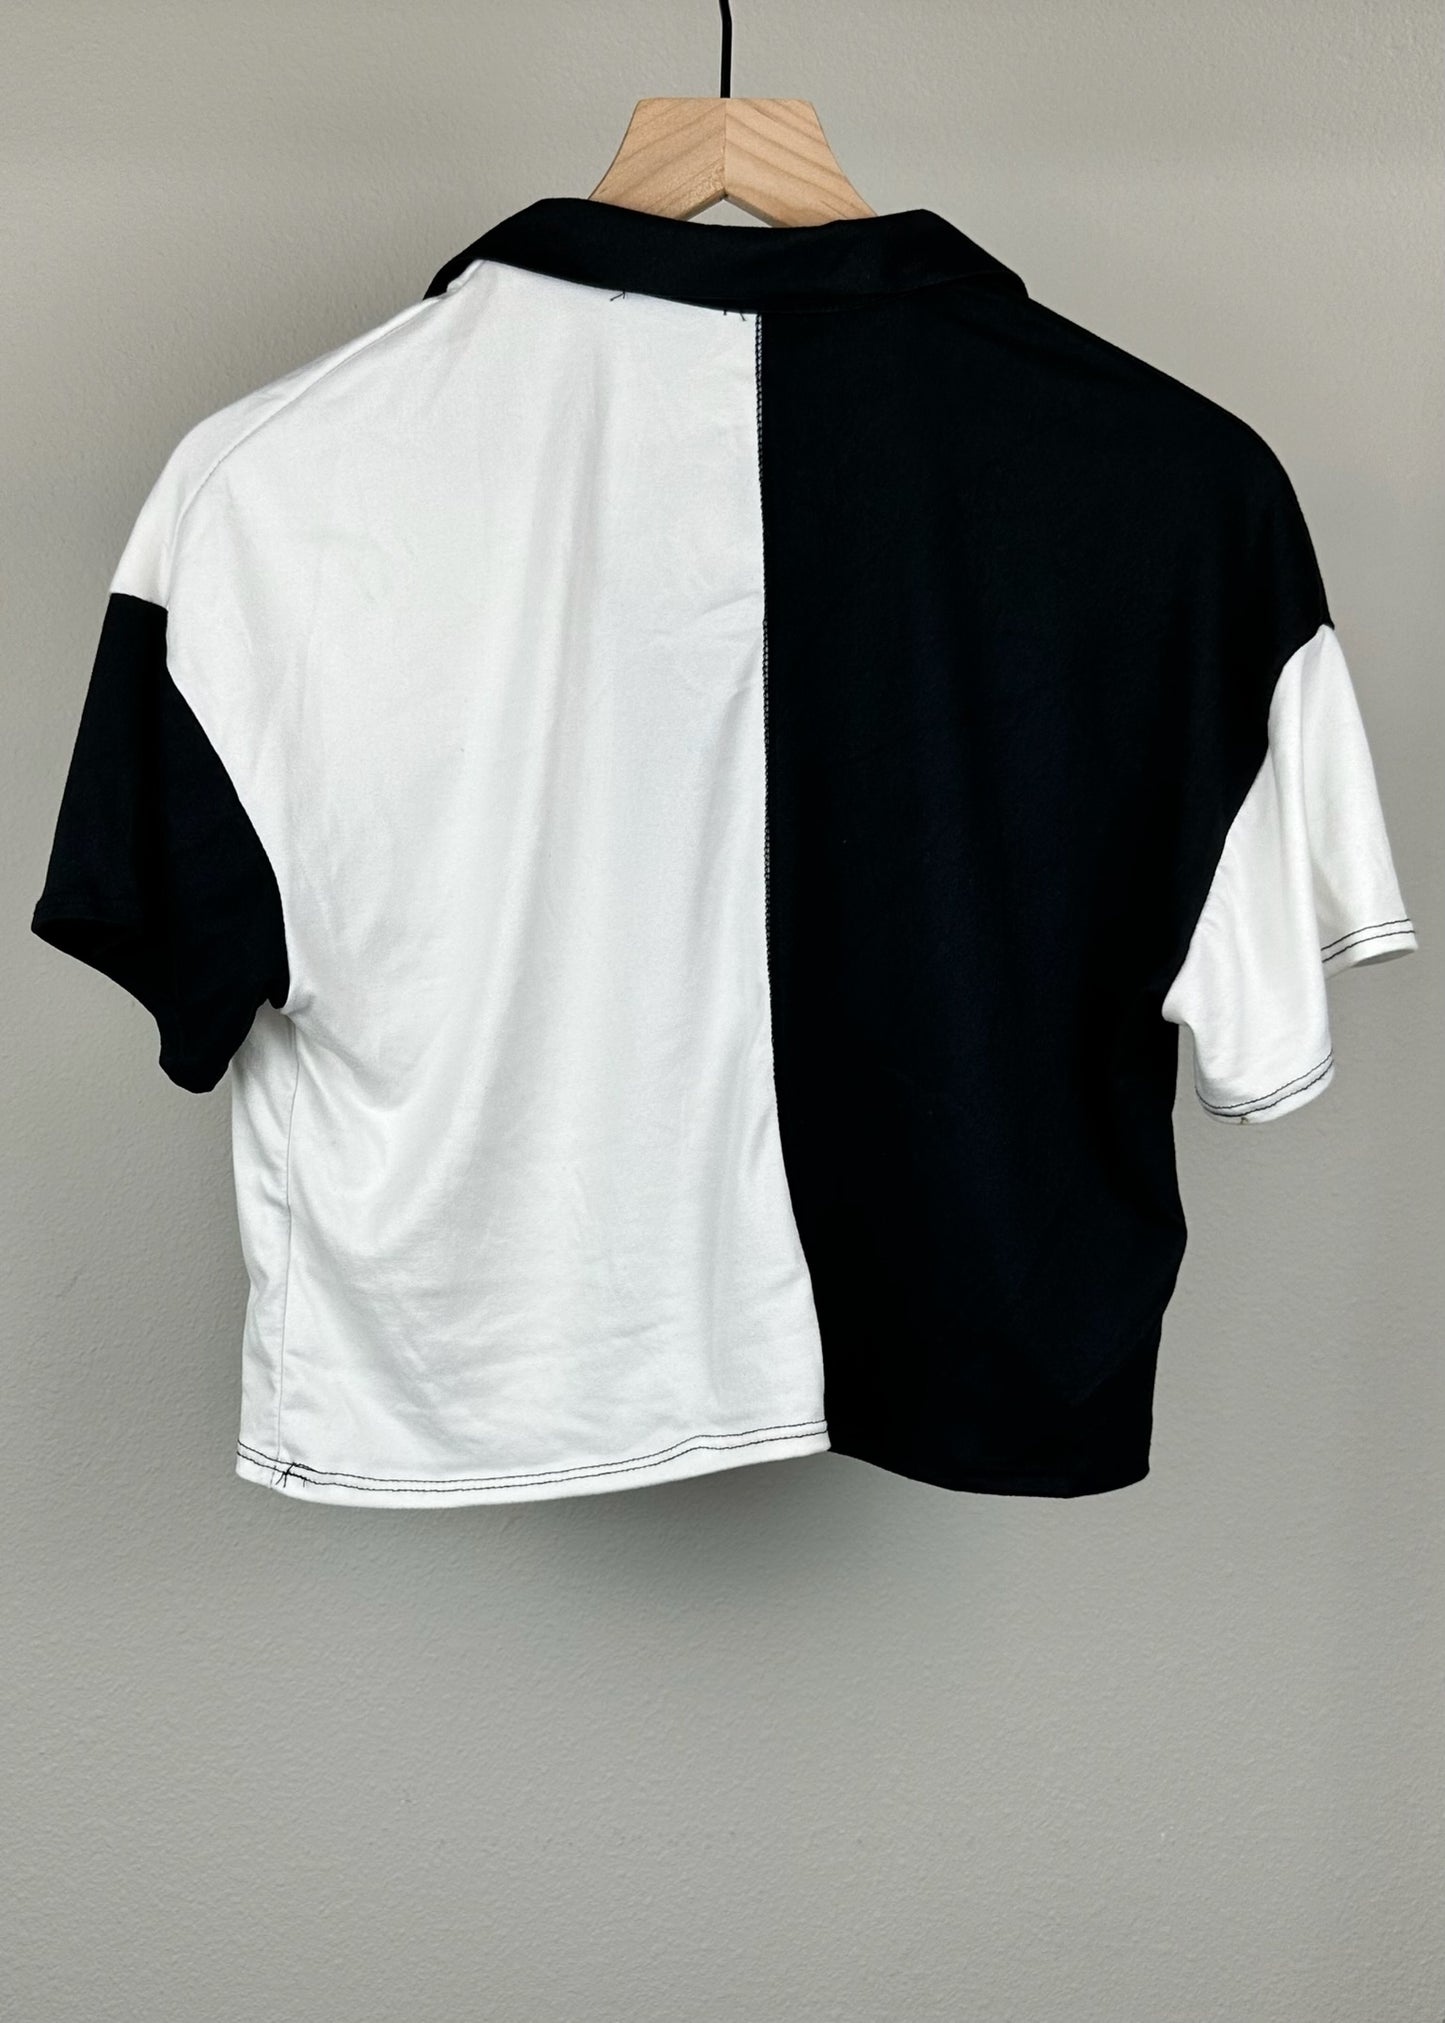 Black and White Shirt by Livi